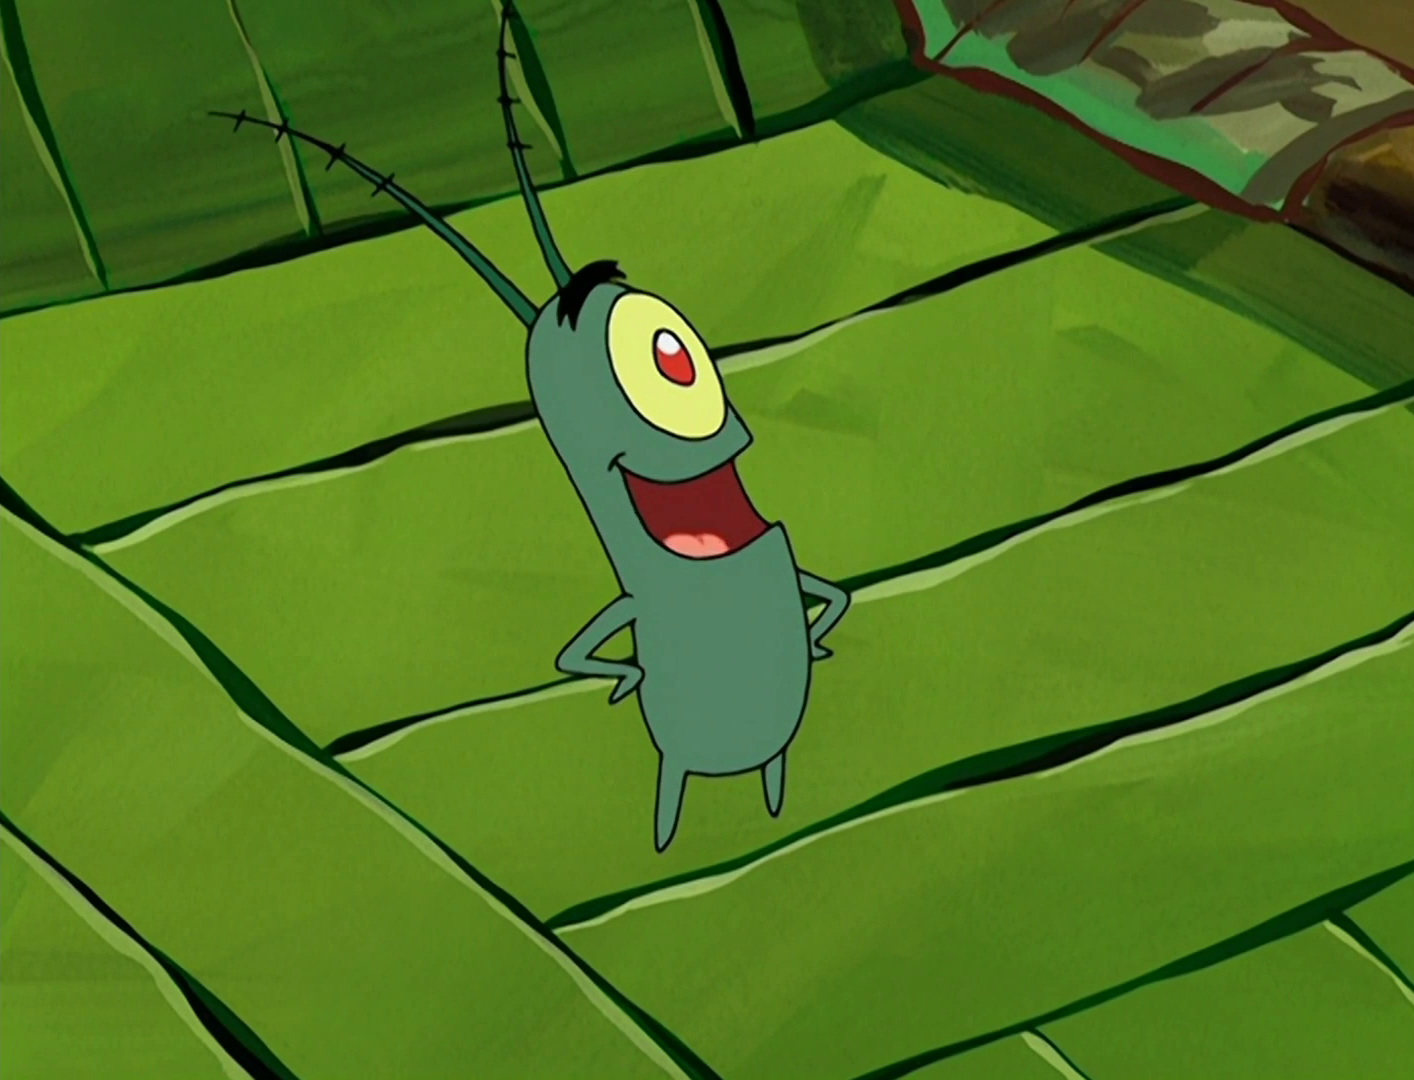 Spongebob Squarepants: Plankton's 10 Best Episodes